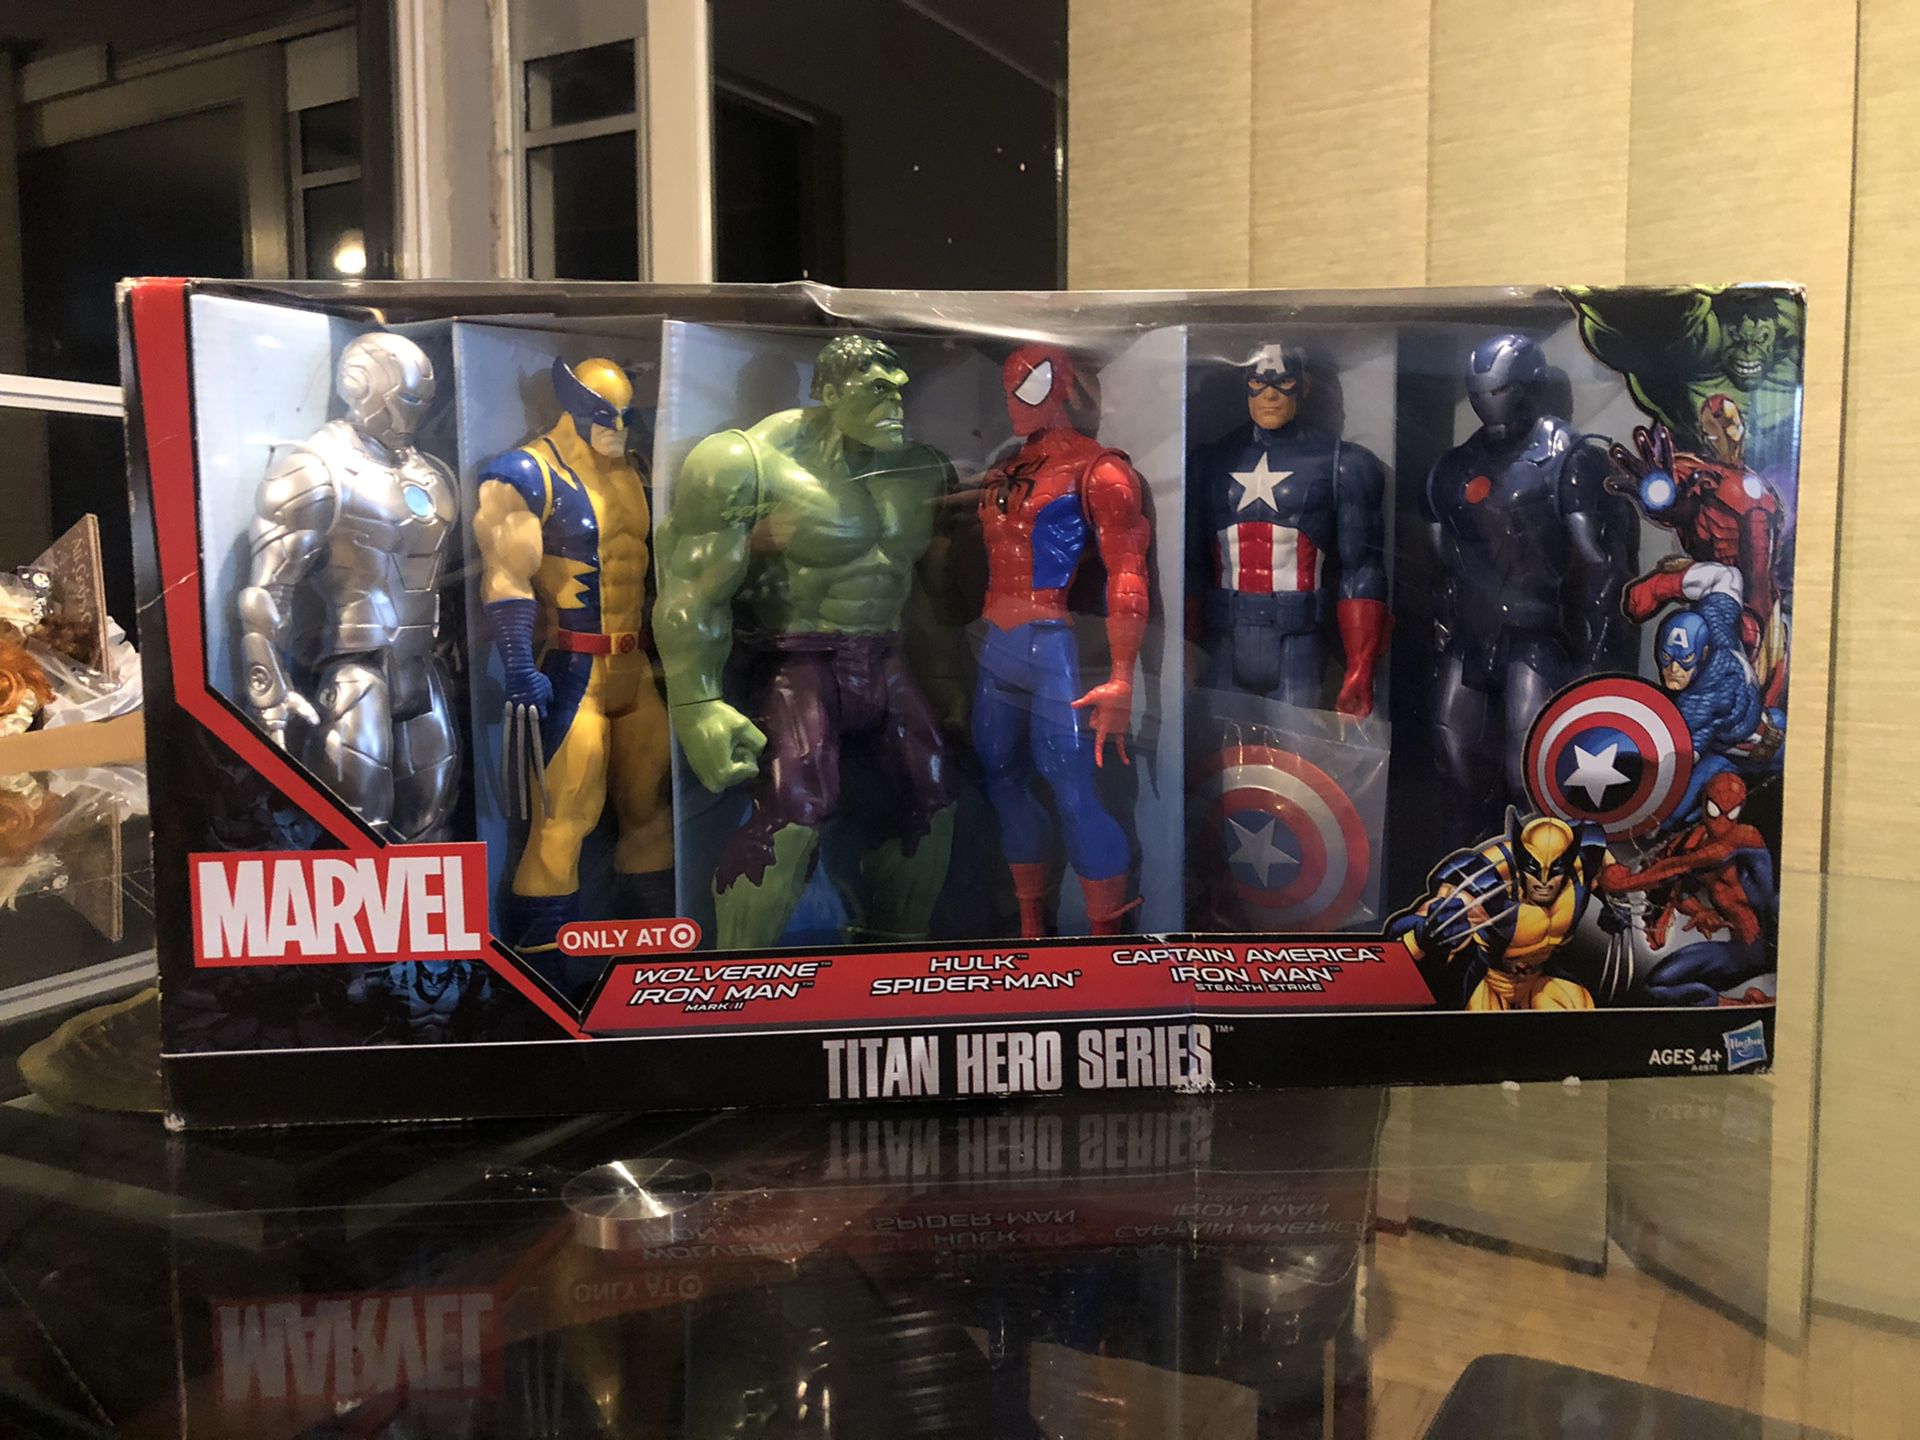 Marvel Avengers Titan Hero Series (target exclusive)